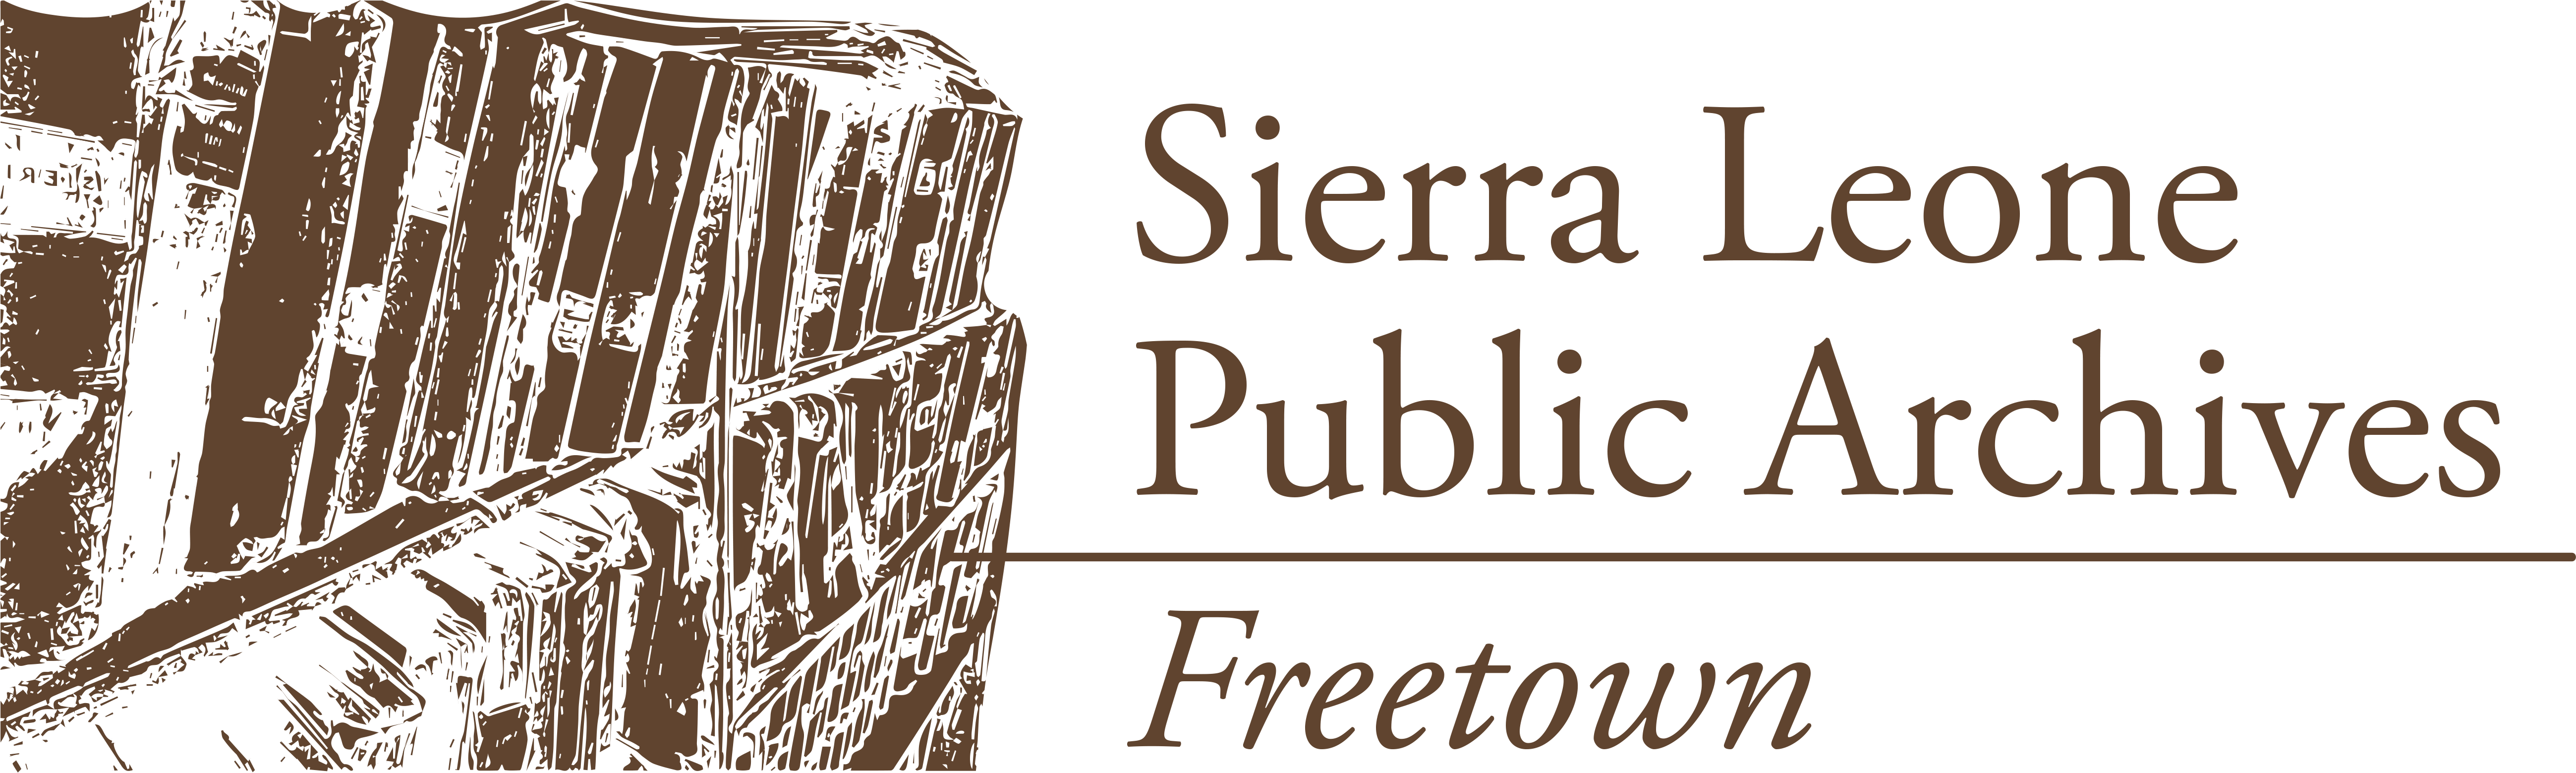 Sierra Leone Public Archives